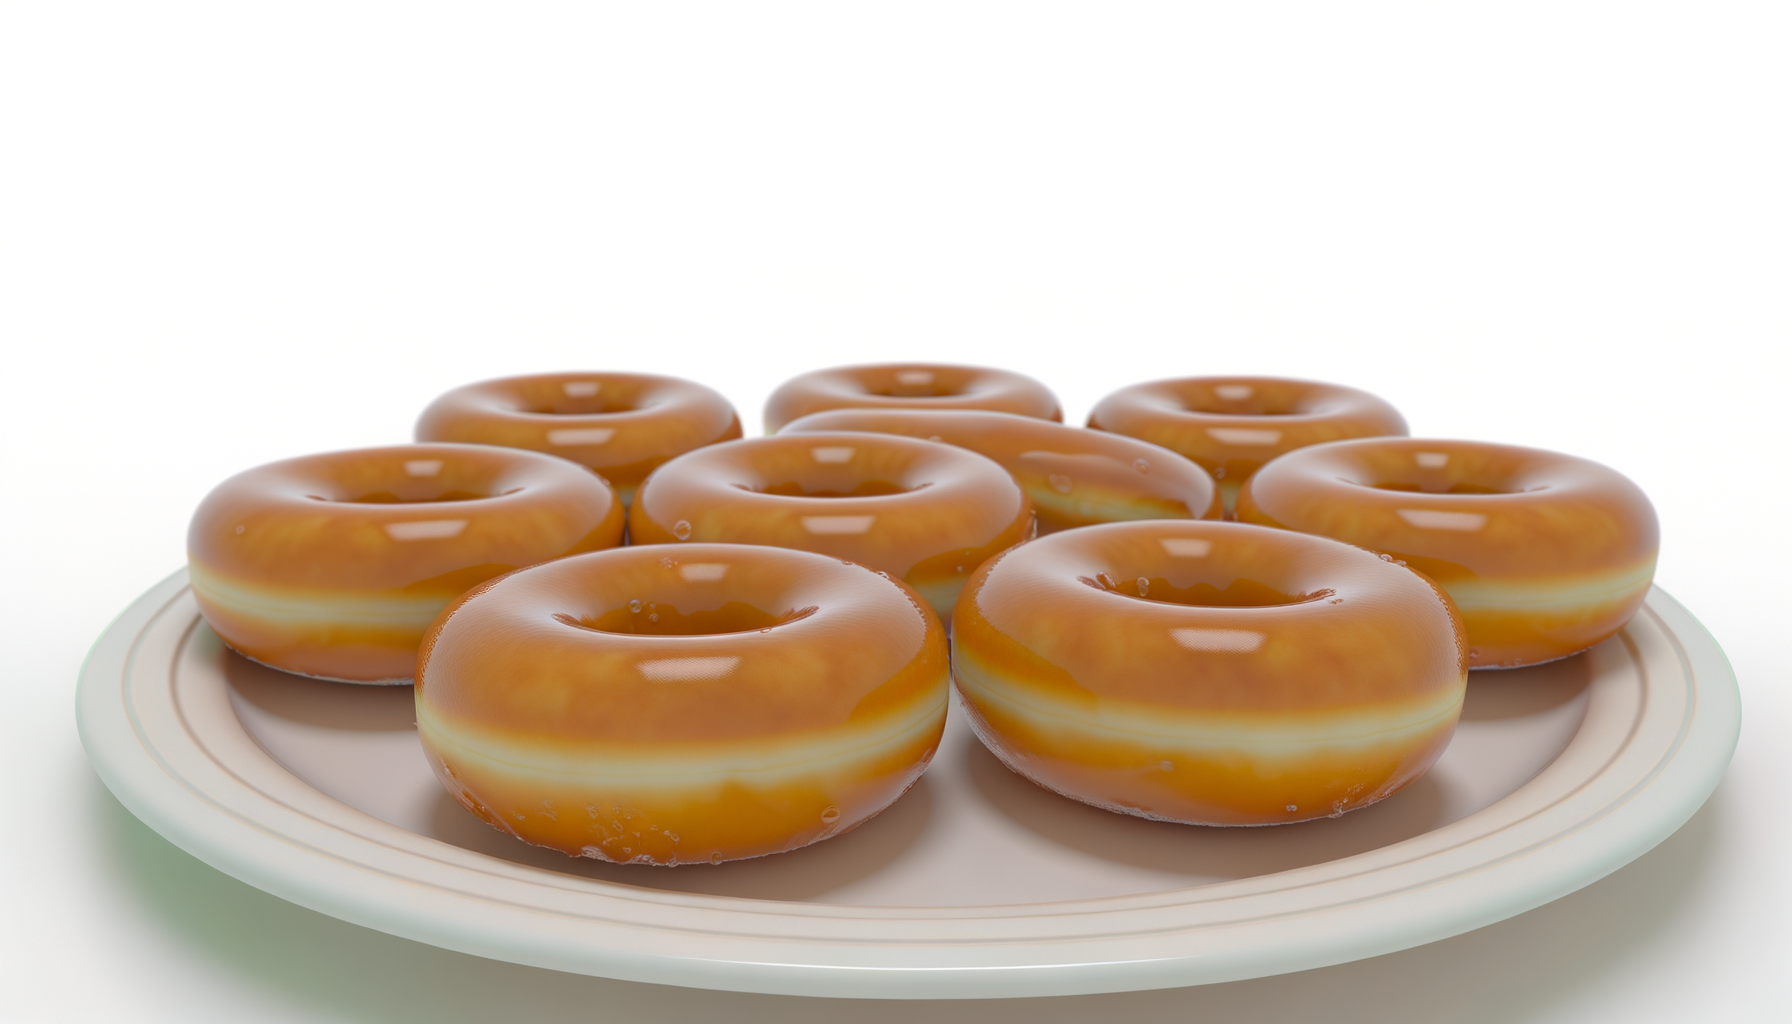 Realistic image of homemade Krispy Kreme doughnuts, freshly glazed on a white plate.